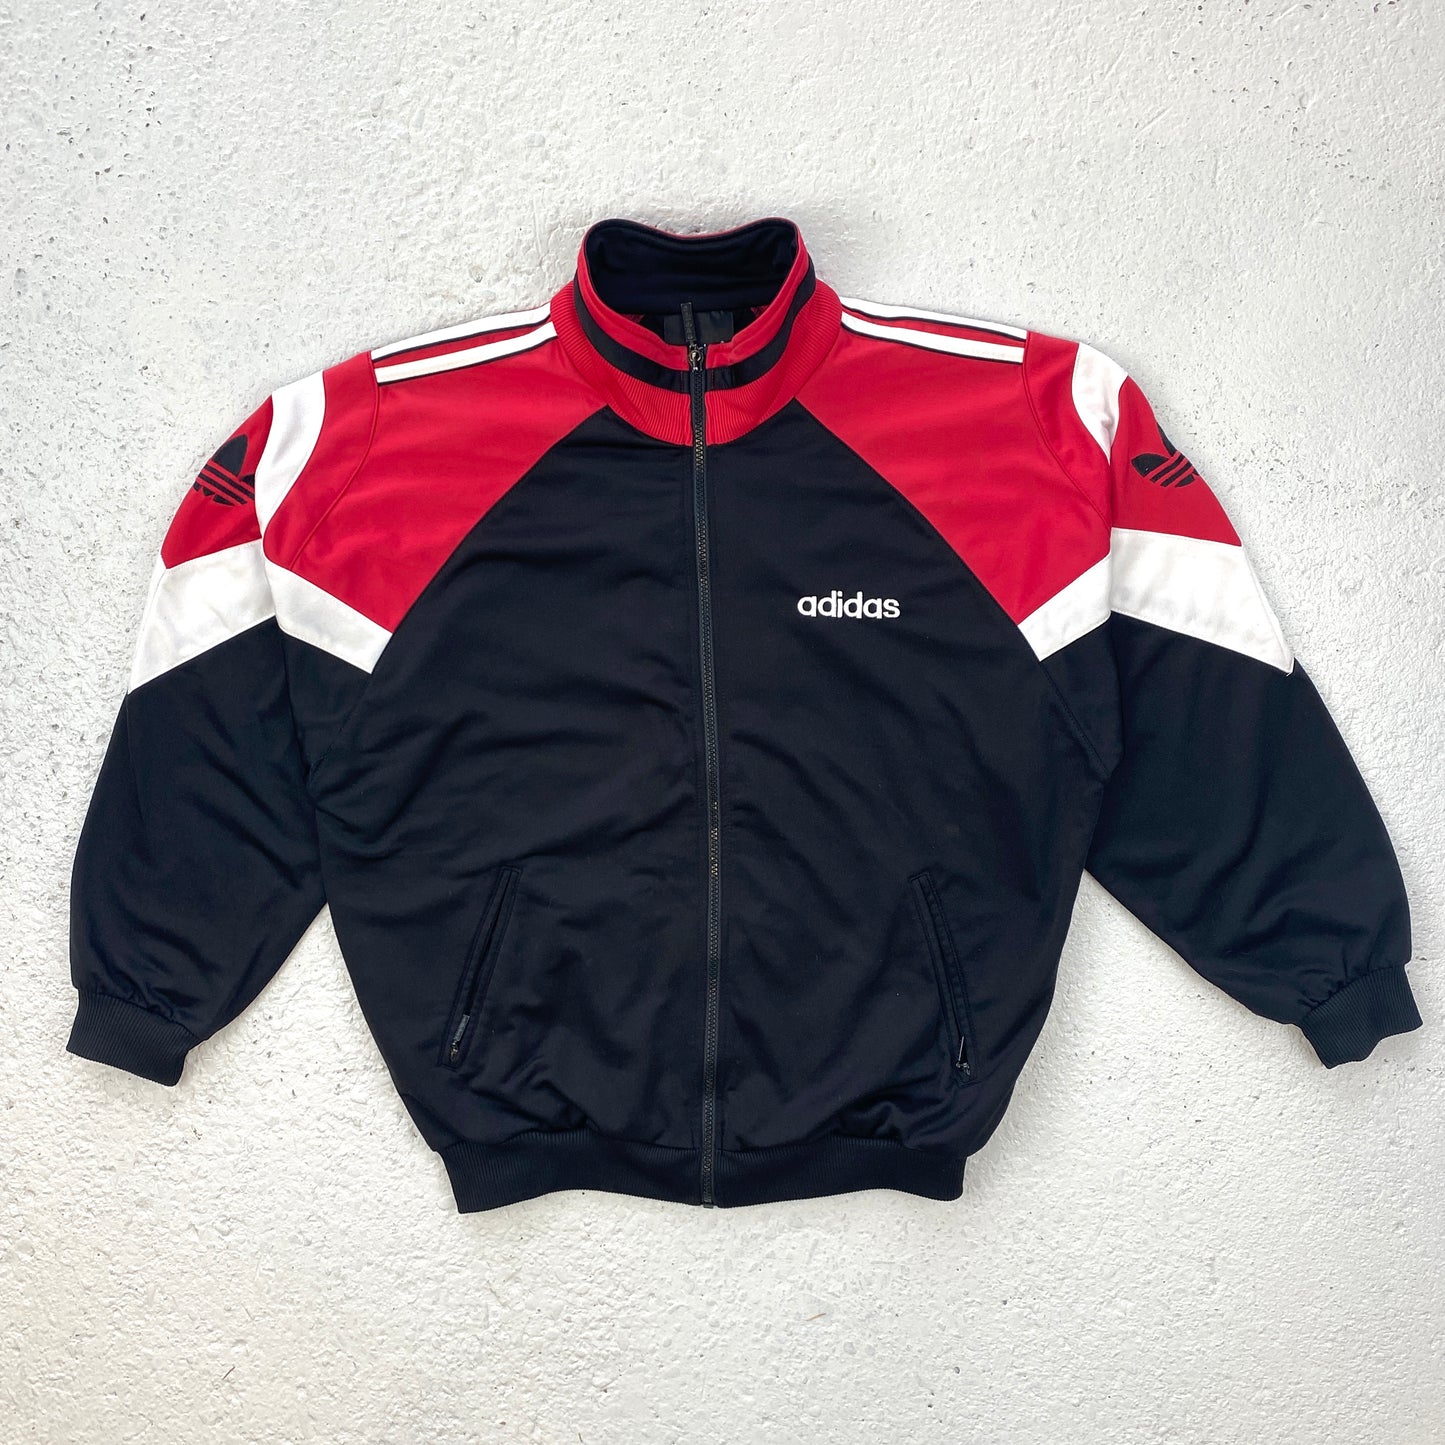 Adidas RARE zip jacket (M-L)